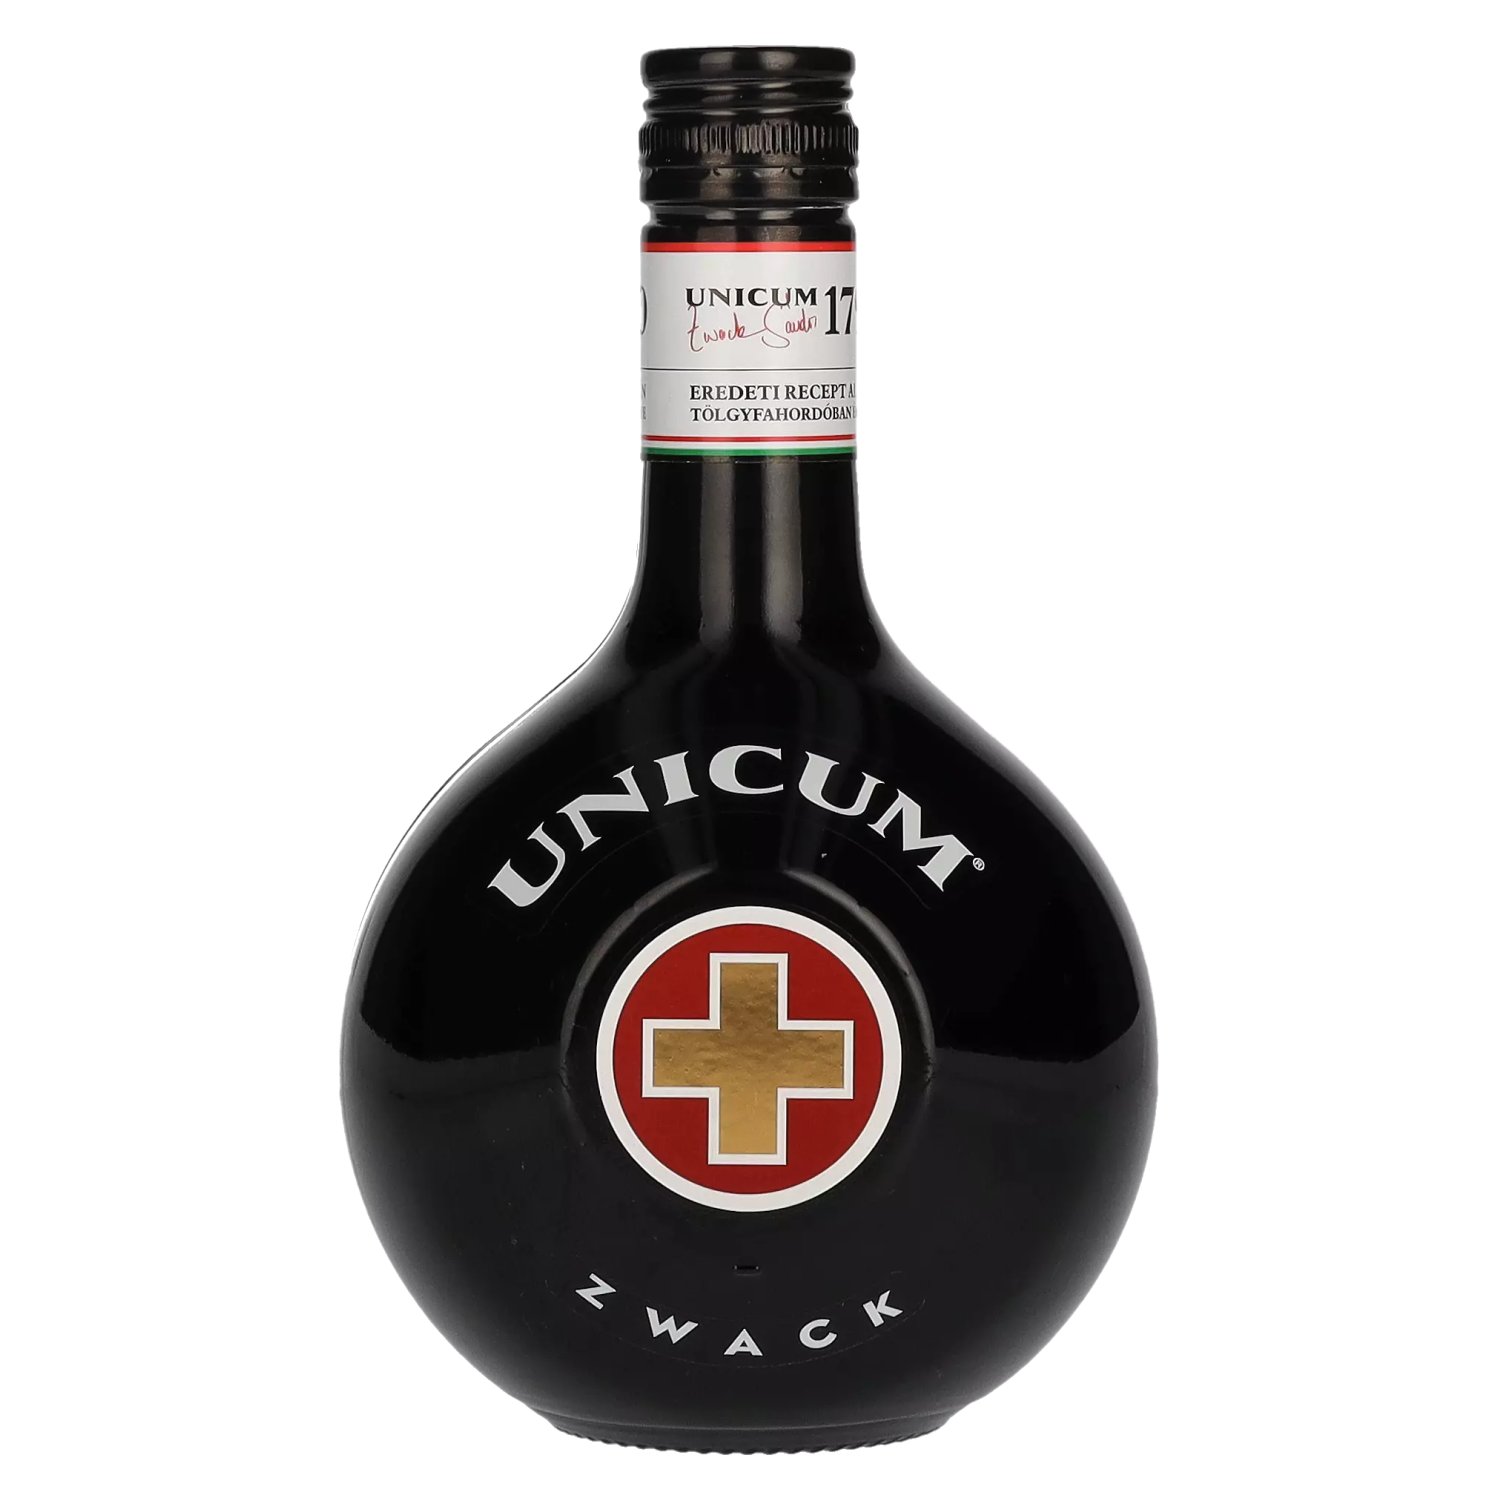 Zwack Vol. Unicum delicando 40% 0,7l -